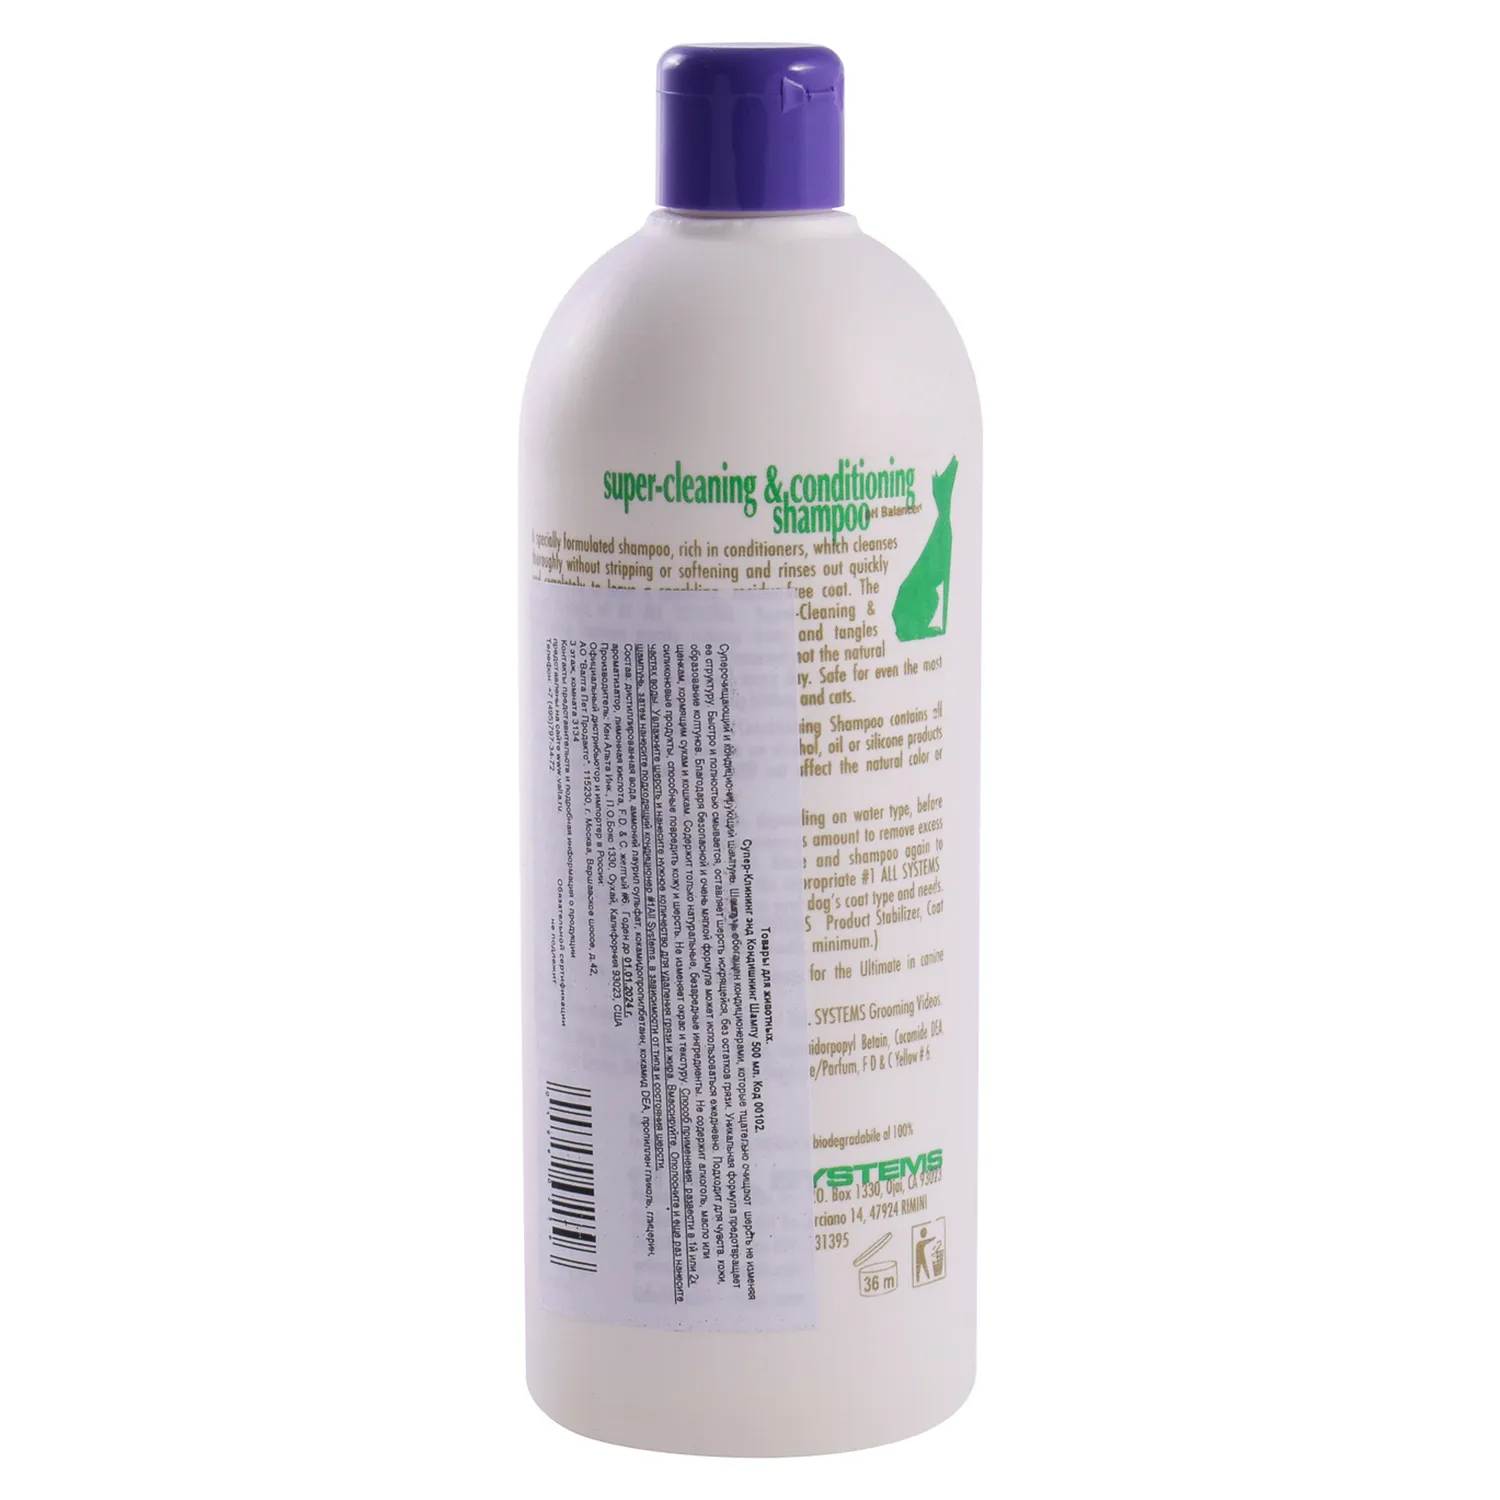 1 All Systems Super-Cleaning&Conditioning Shampoo шампунь суперочищающий 500 мл